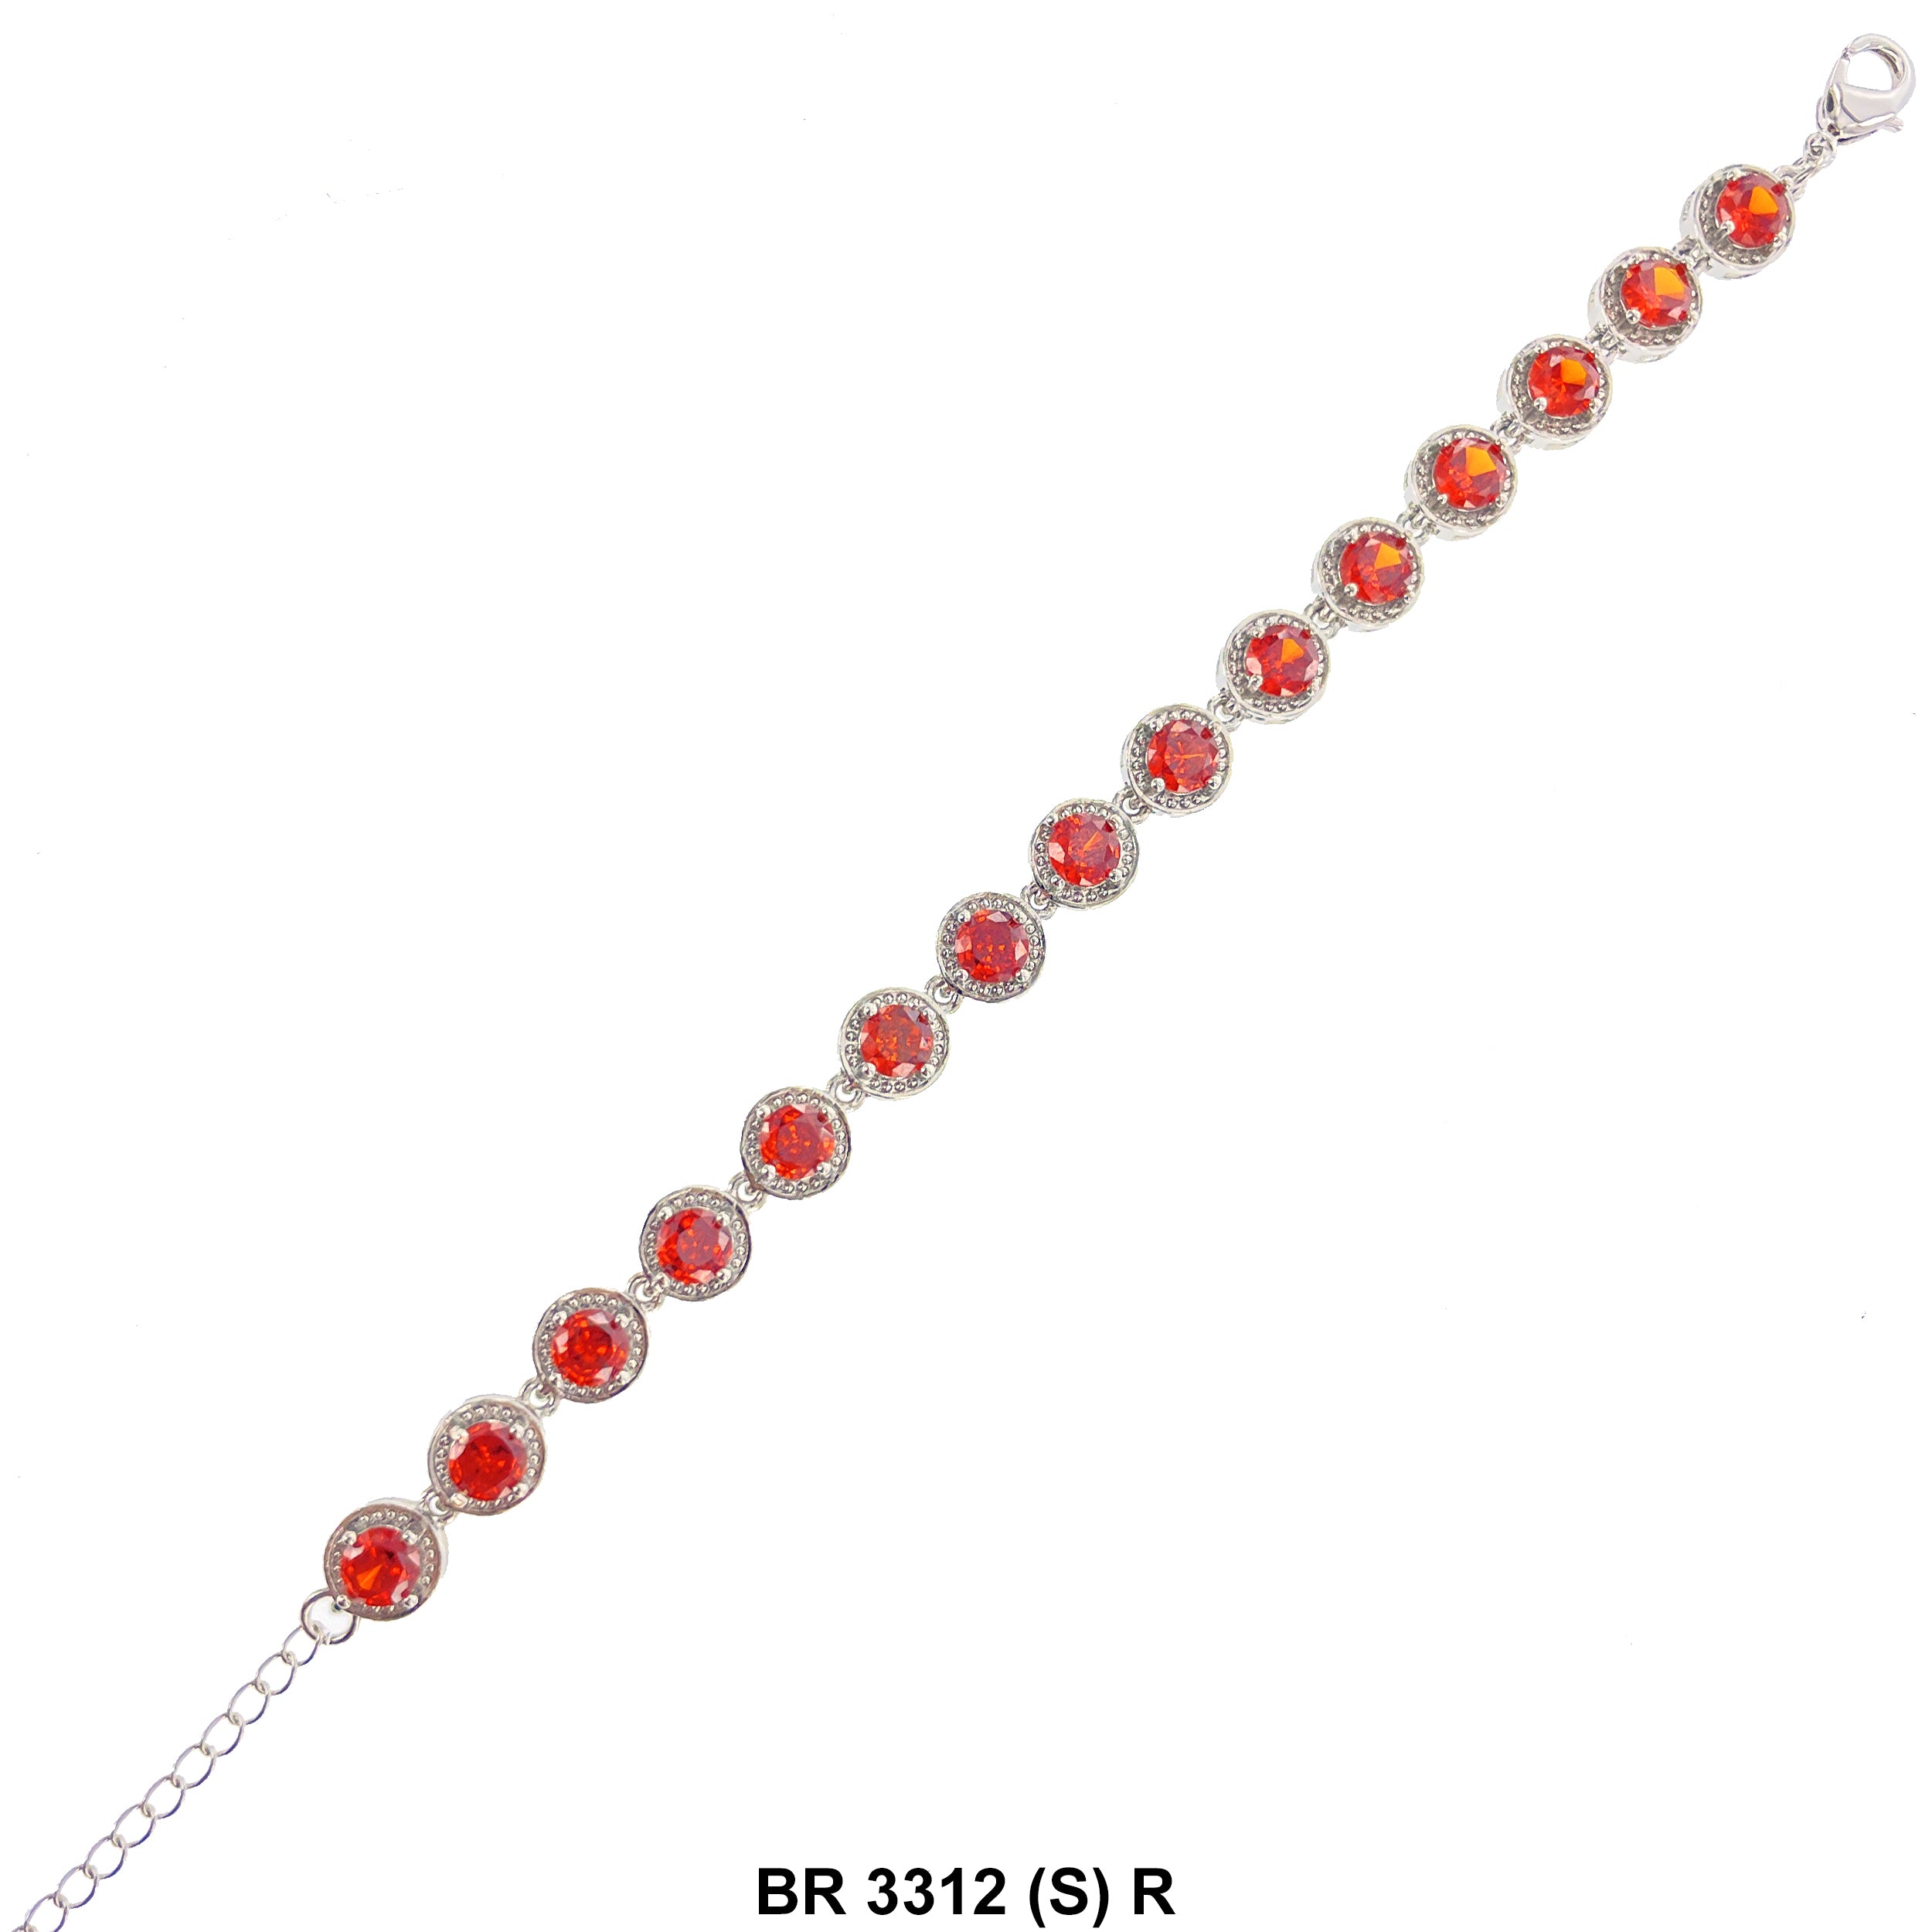 Cubic Zirconia Tennis Bracelet BR 3312 (S) R